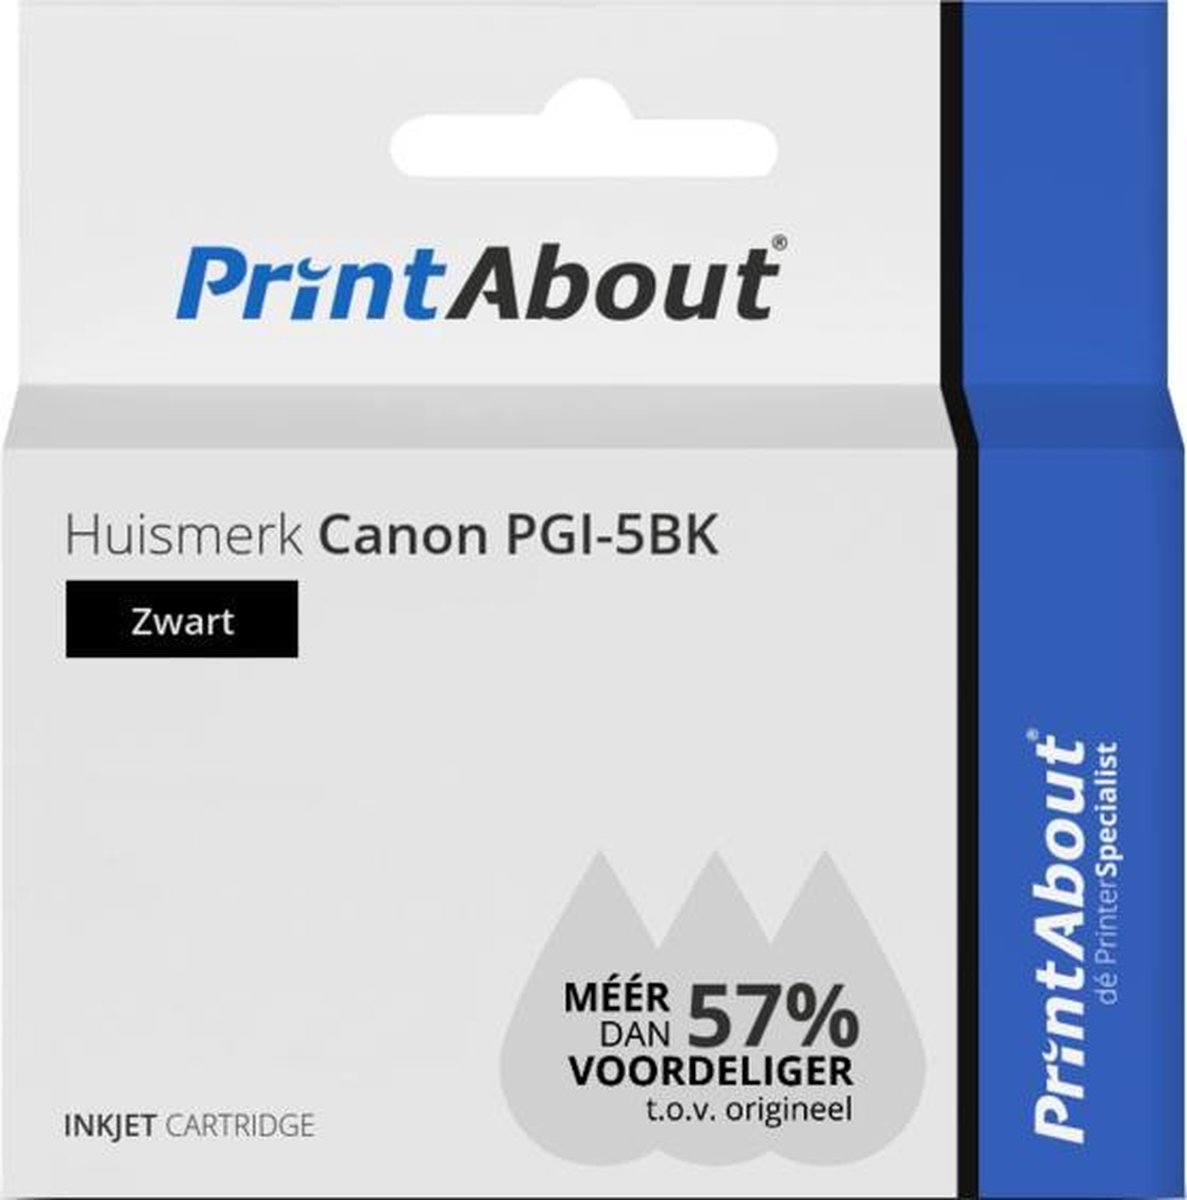 PrintAbout Huismerk Canon PGI-5BK Inktcartridge - Zwart